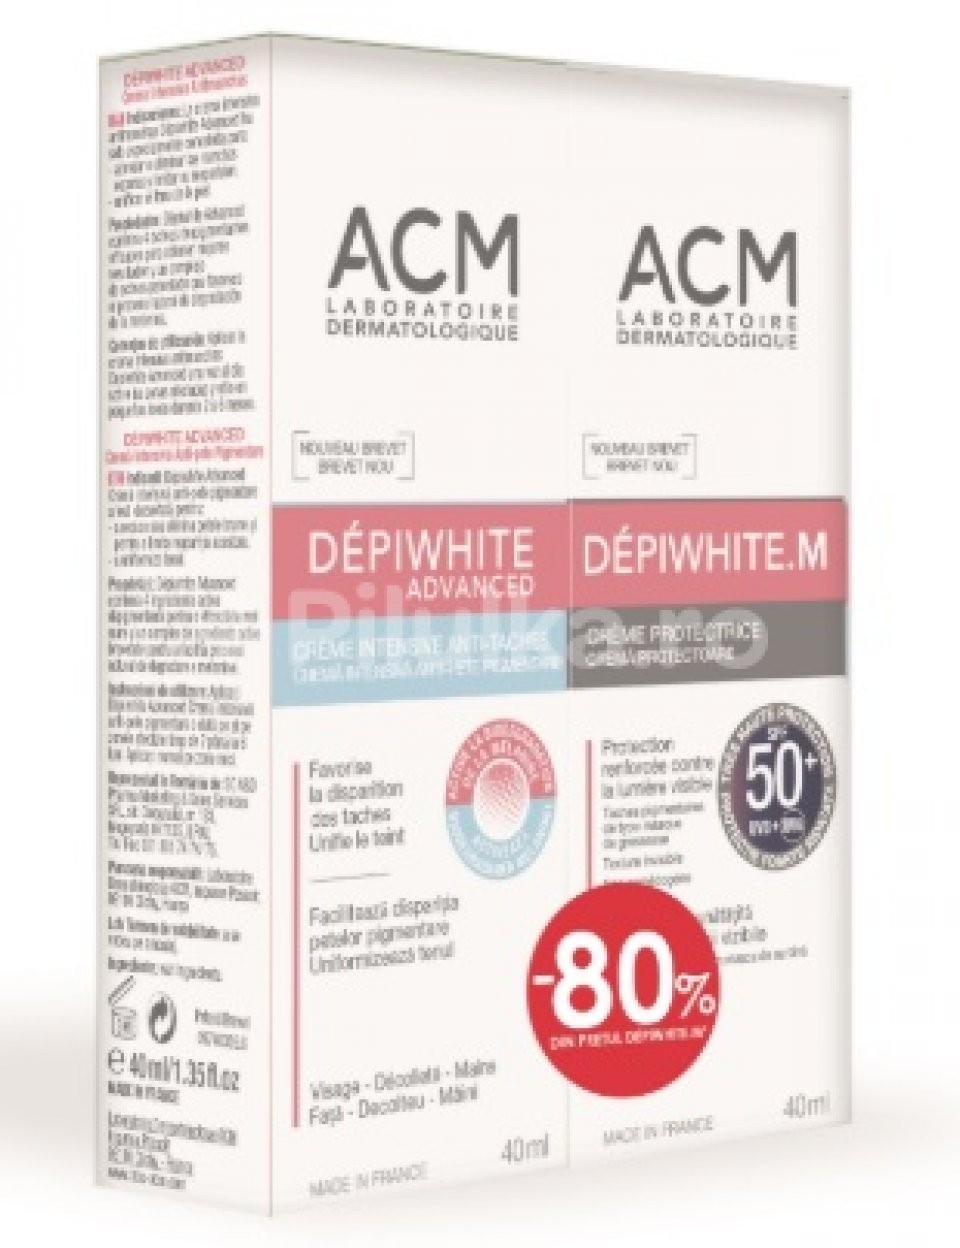 Pete pigmentare - ACM PROMO DEPIWHITE ADVANCED 40ML + DEPIWHITE M 40ML -80%, axafarm.ro